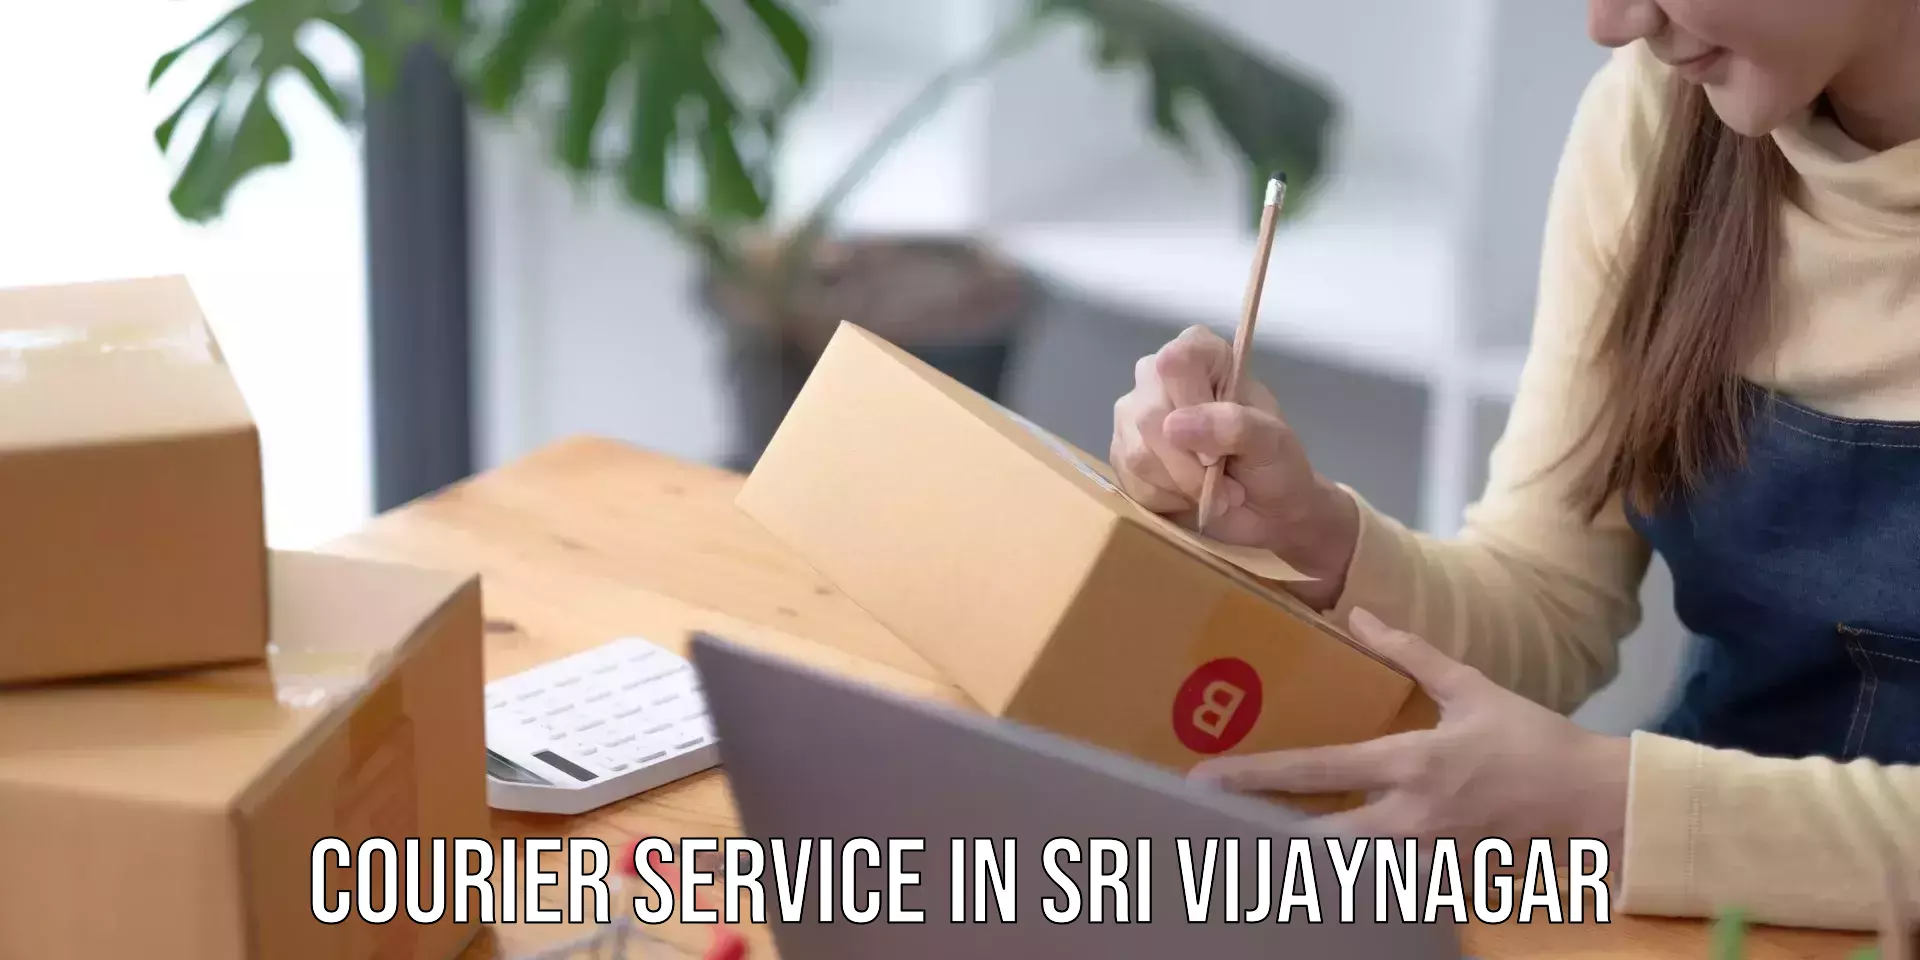 Online courier booking in Sri Vijaynagar